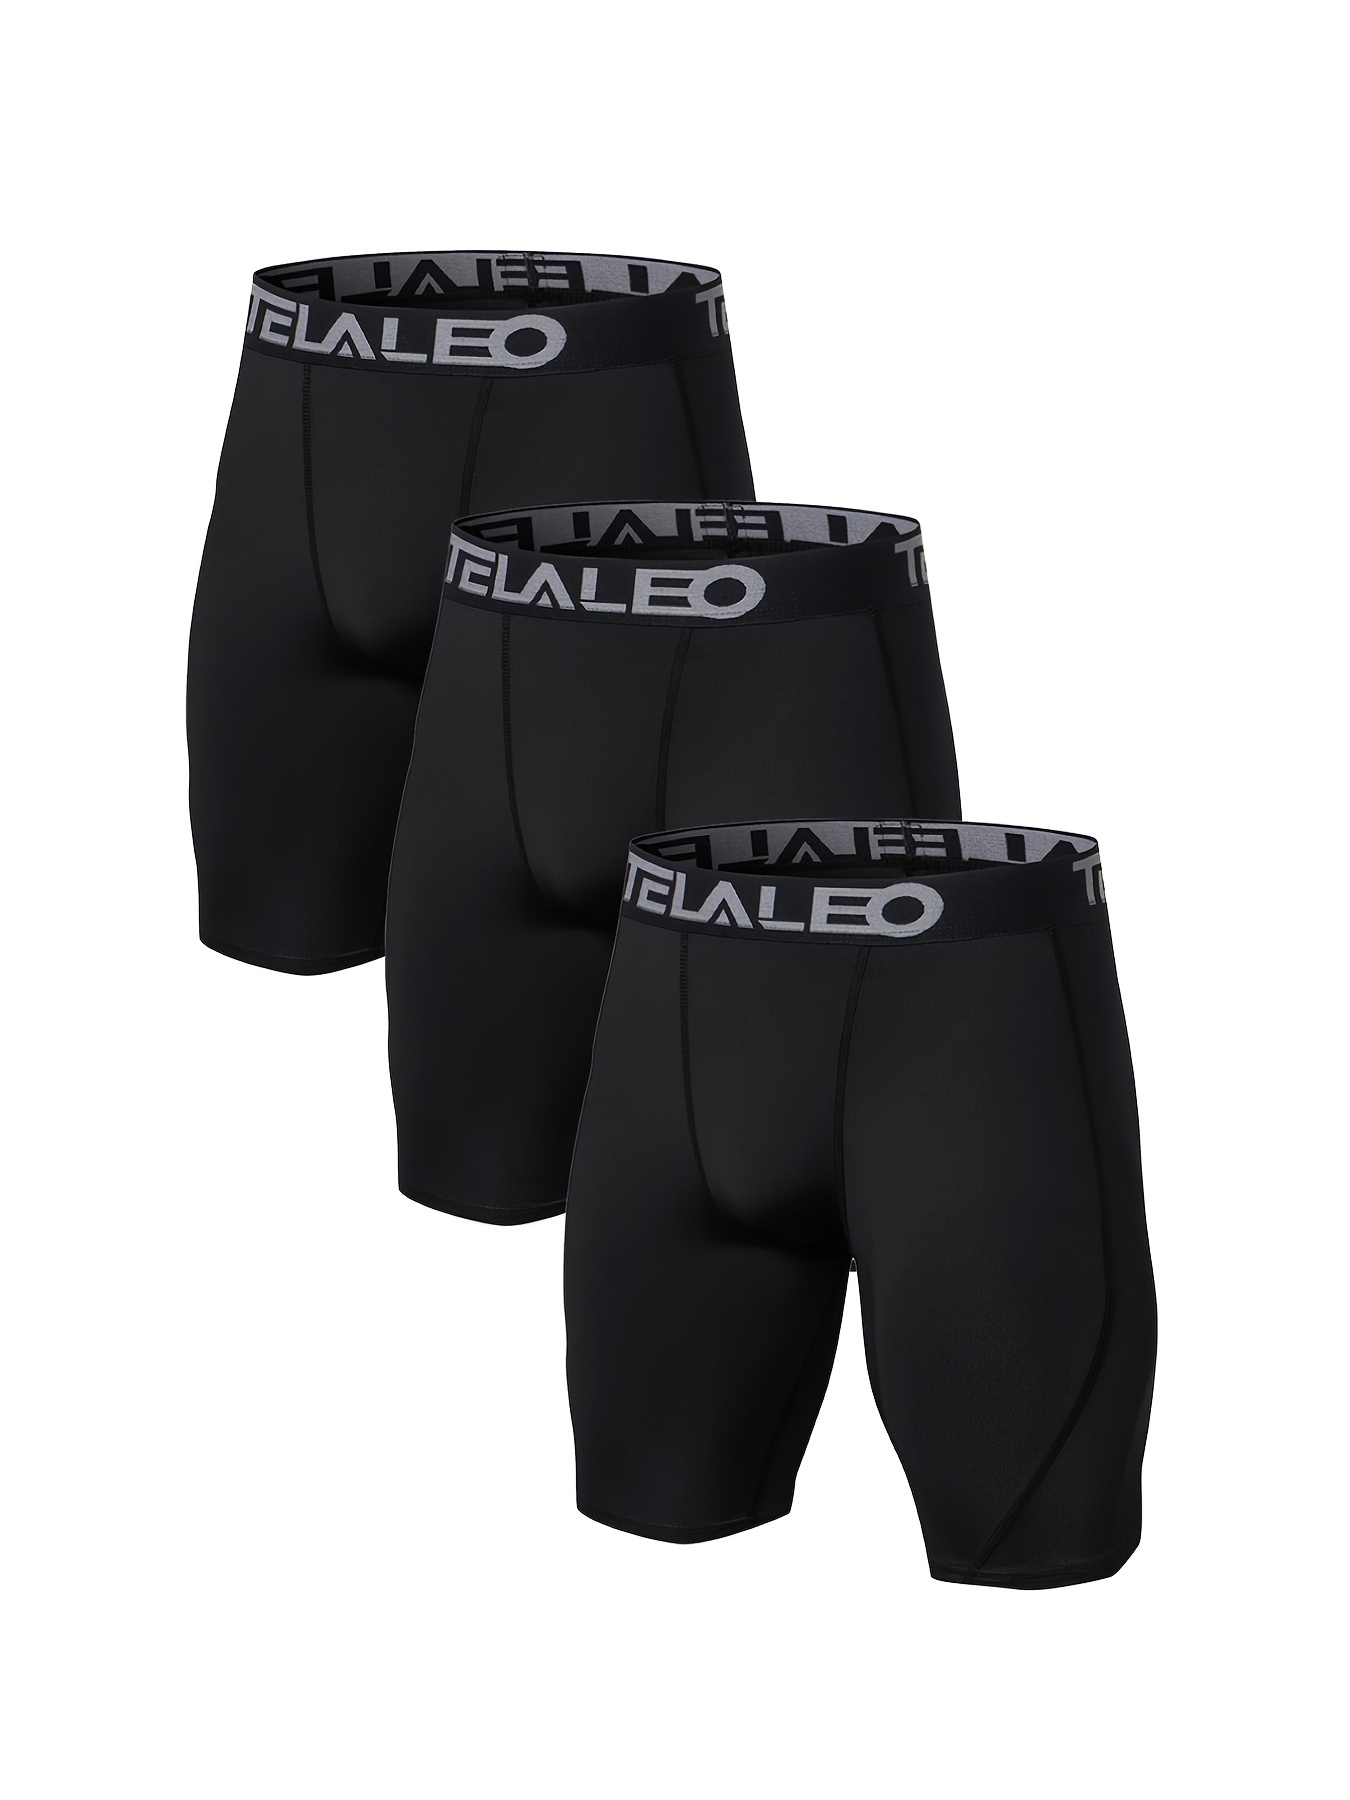 3pcs Men's Sports Running Quick Drying Boxer Briefs Underwear, Long Leg  Performance Compression Men's Underwear Panties